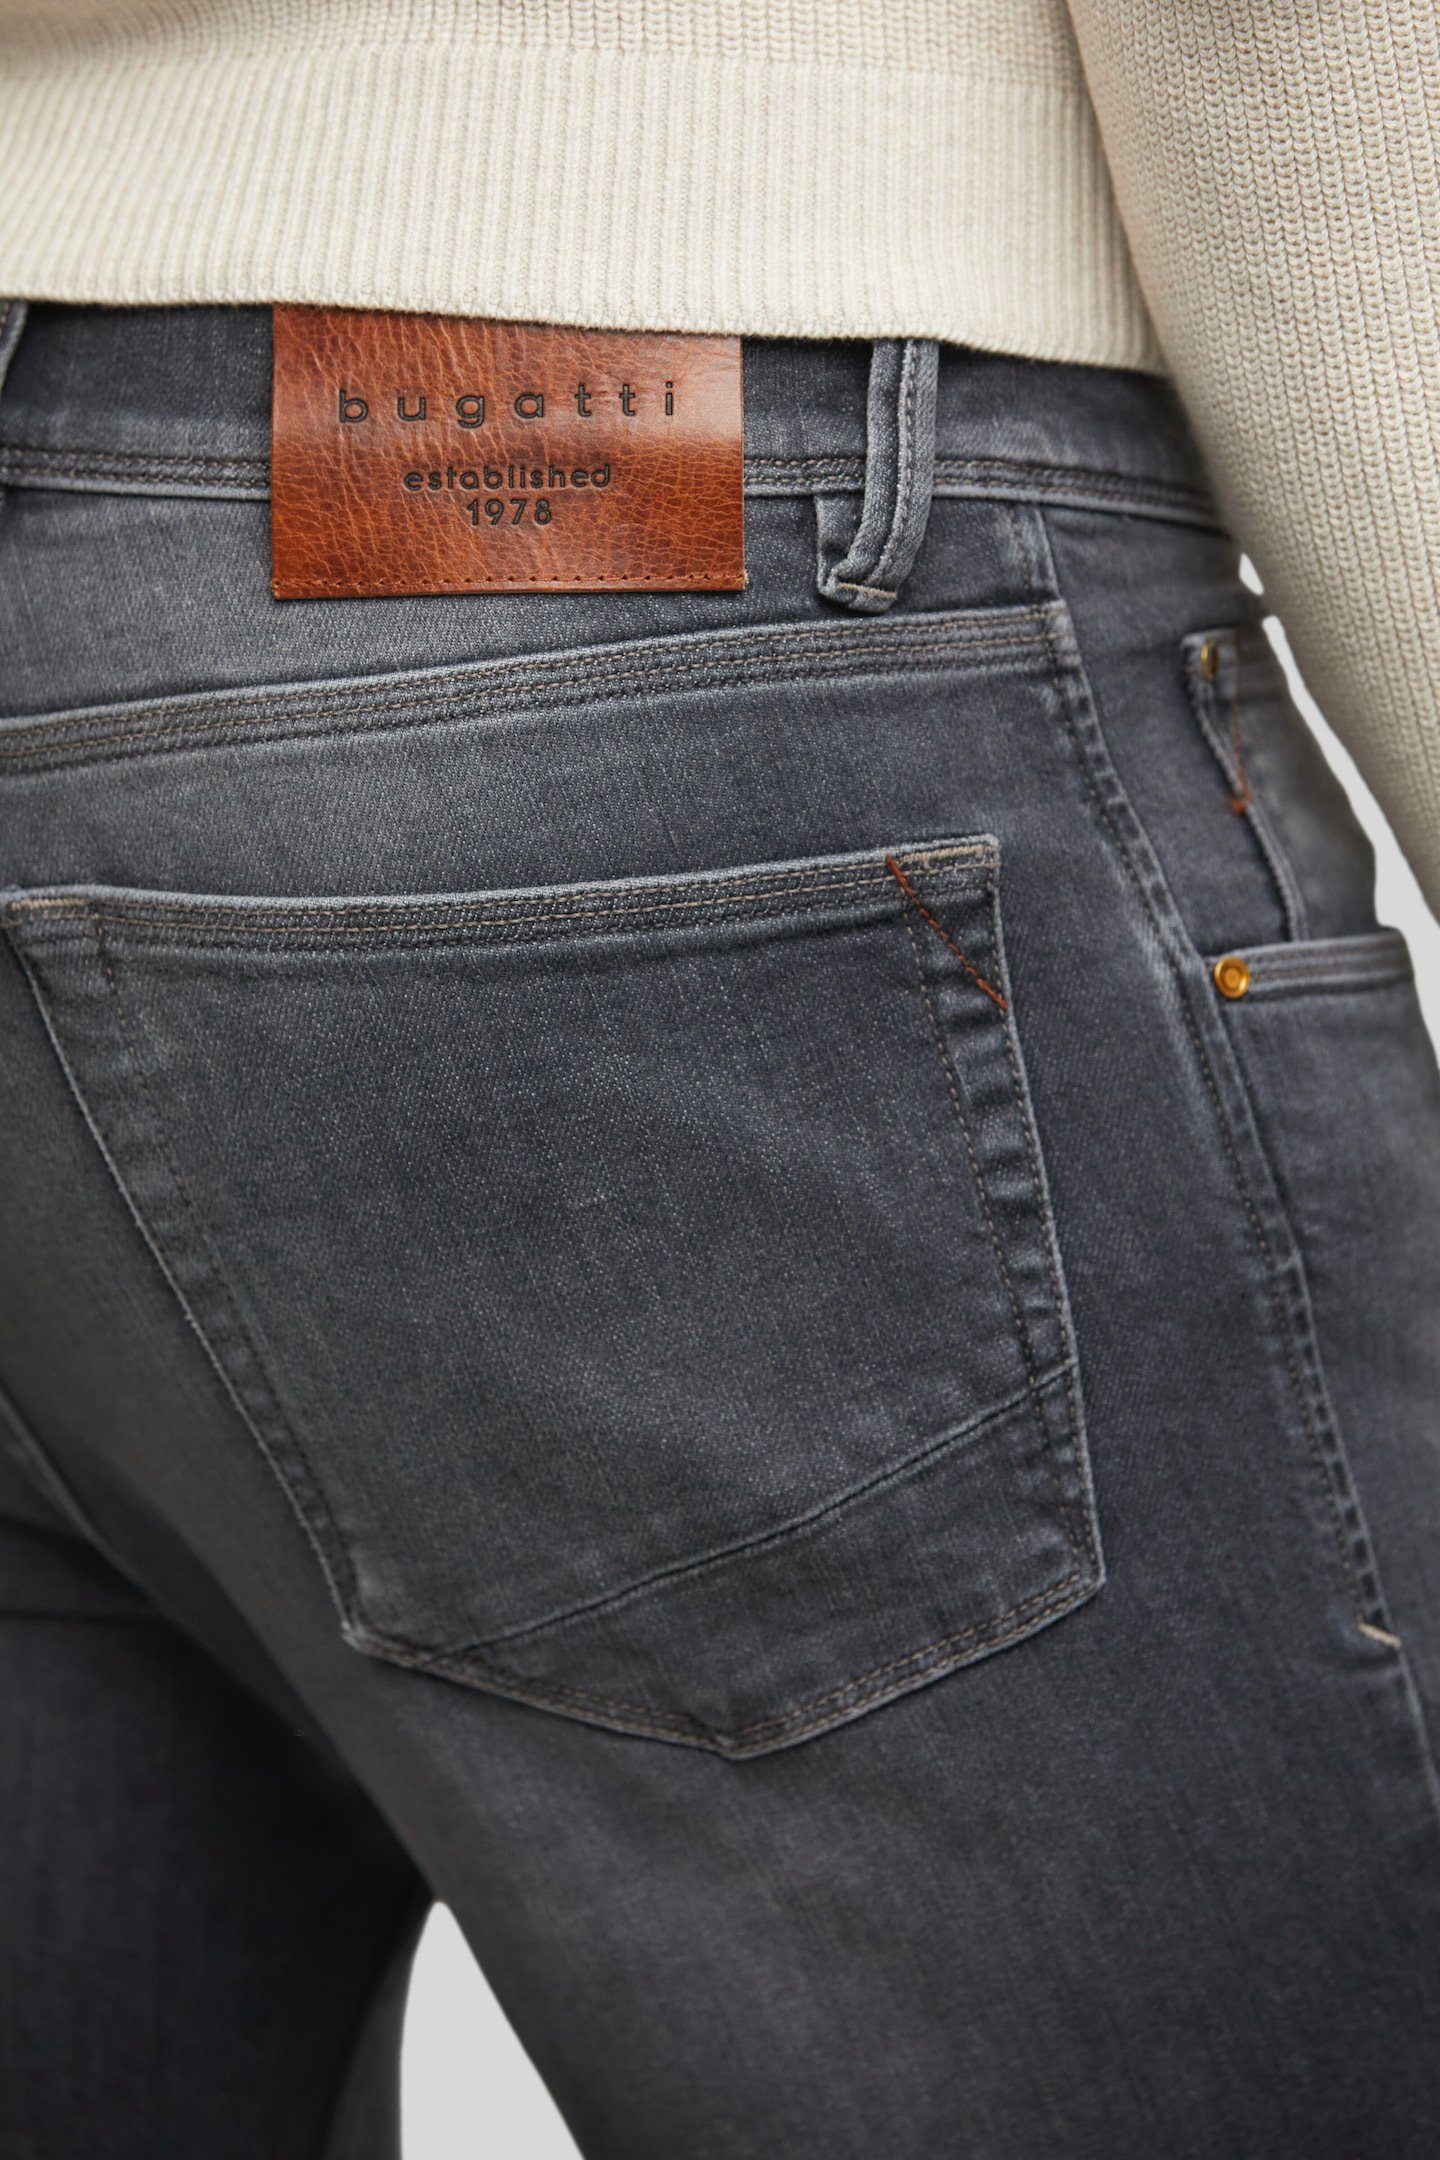 Used im dunkelgrau 5-Pocket-Jeans Wash Look bugatti